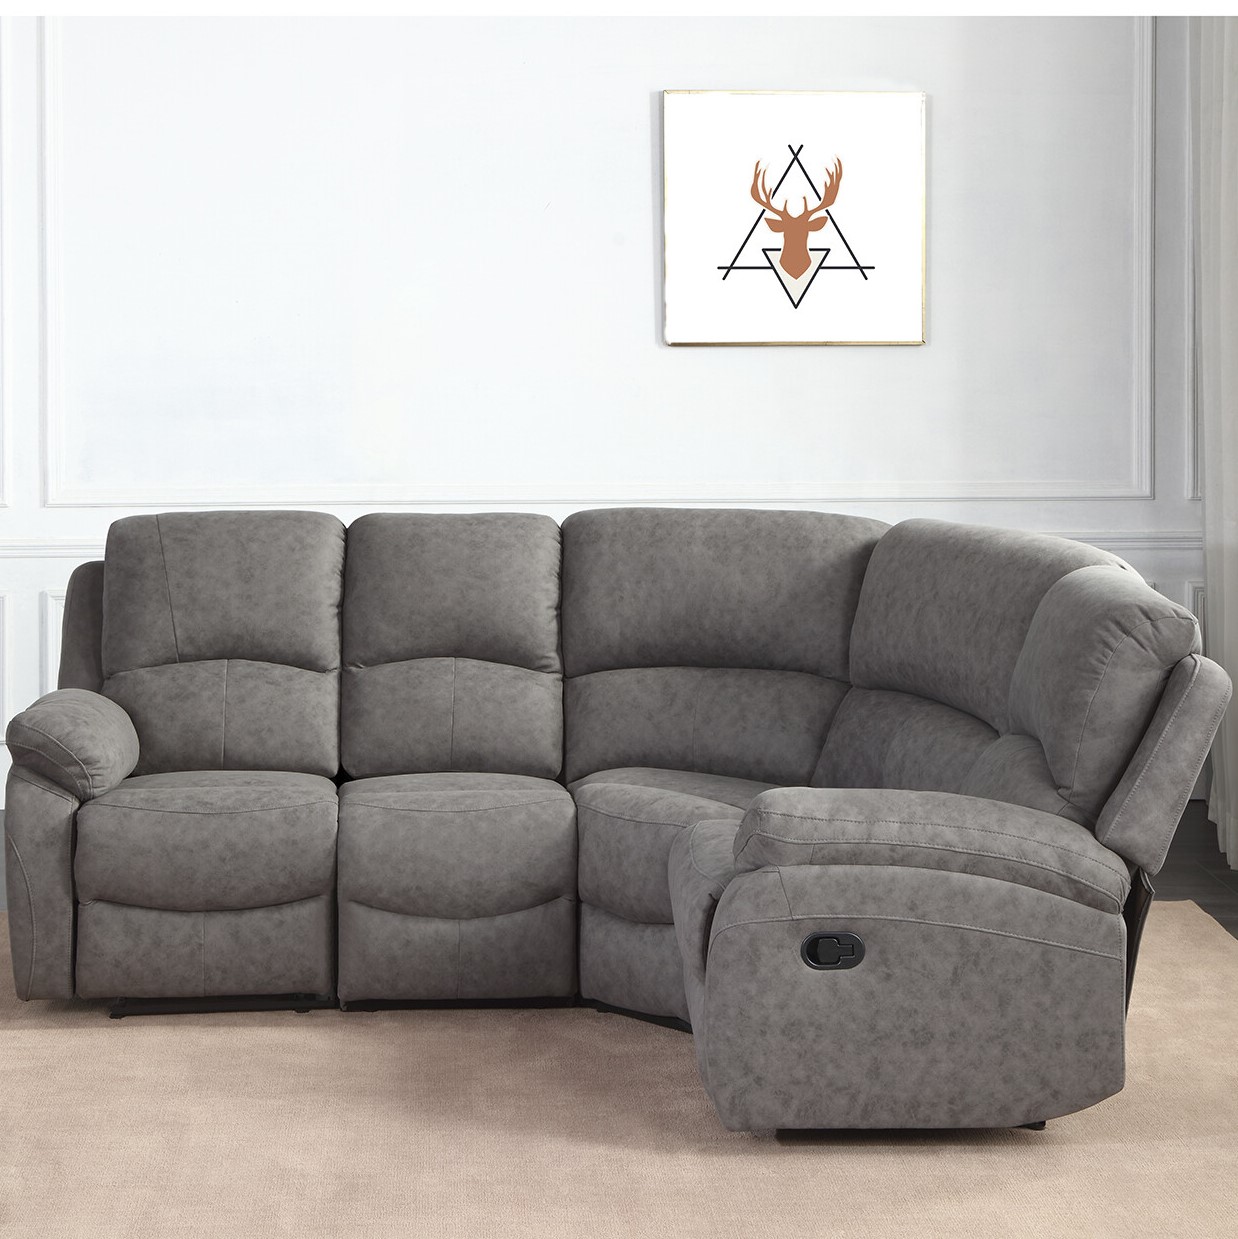 Milano 4 Seater Grey Fabric Reversible Corner Sofa Image 1